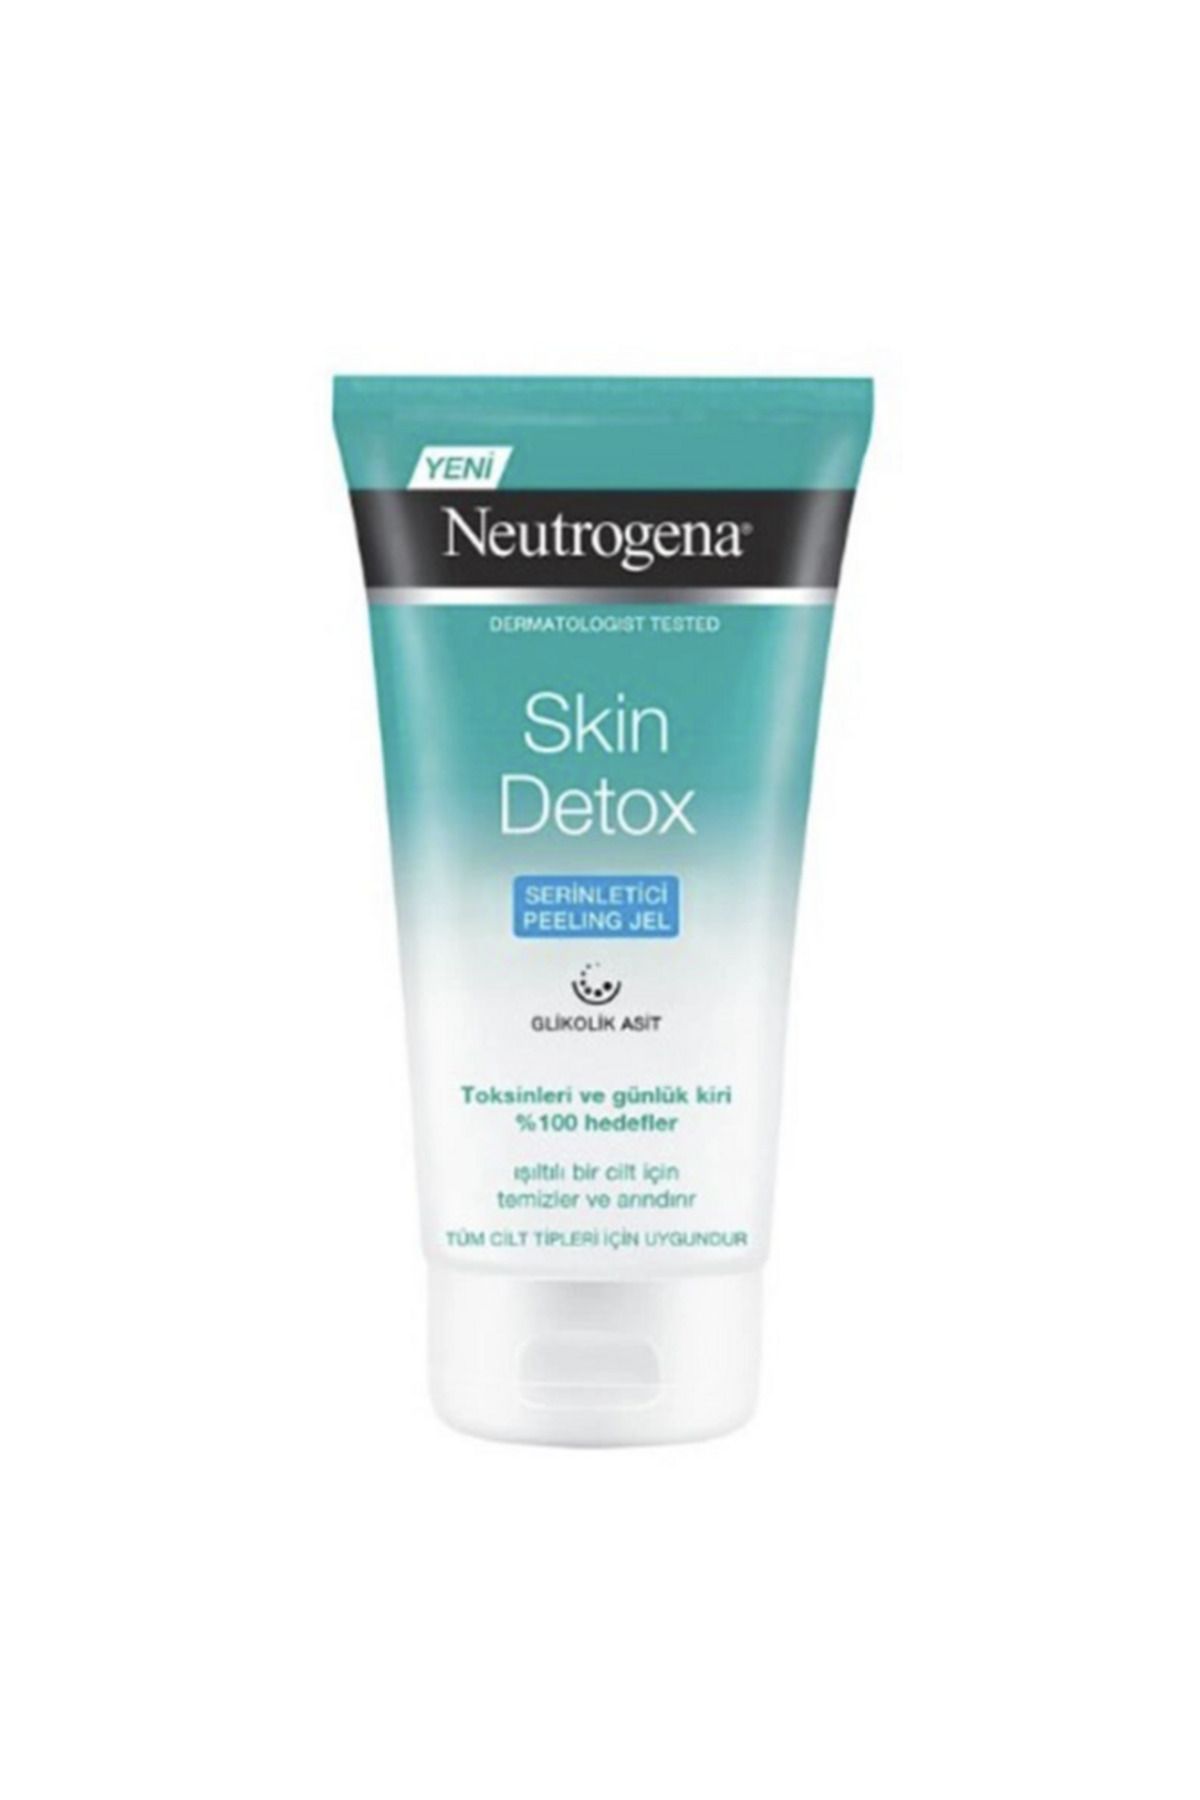 Neutrogena Skin Detox Serinletici Peeling Jel 150 ml -MFREYON00317